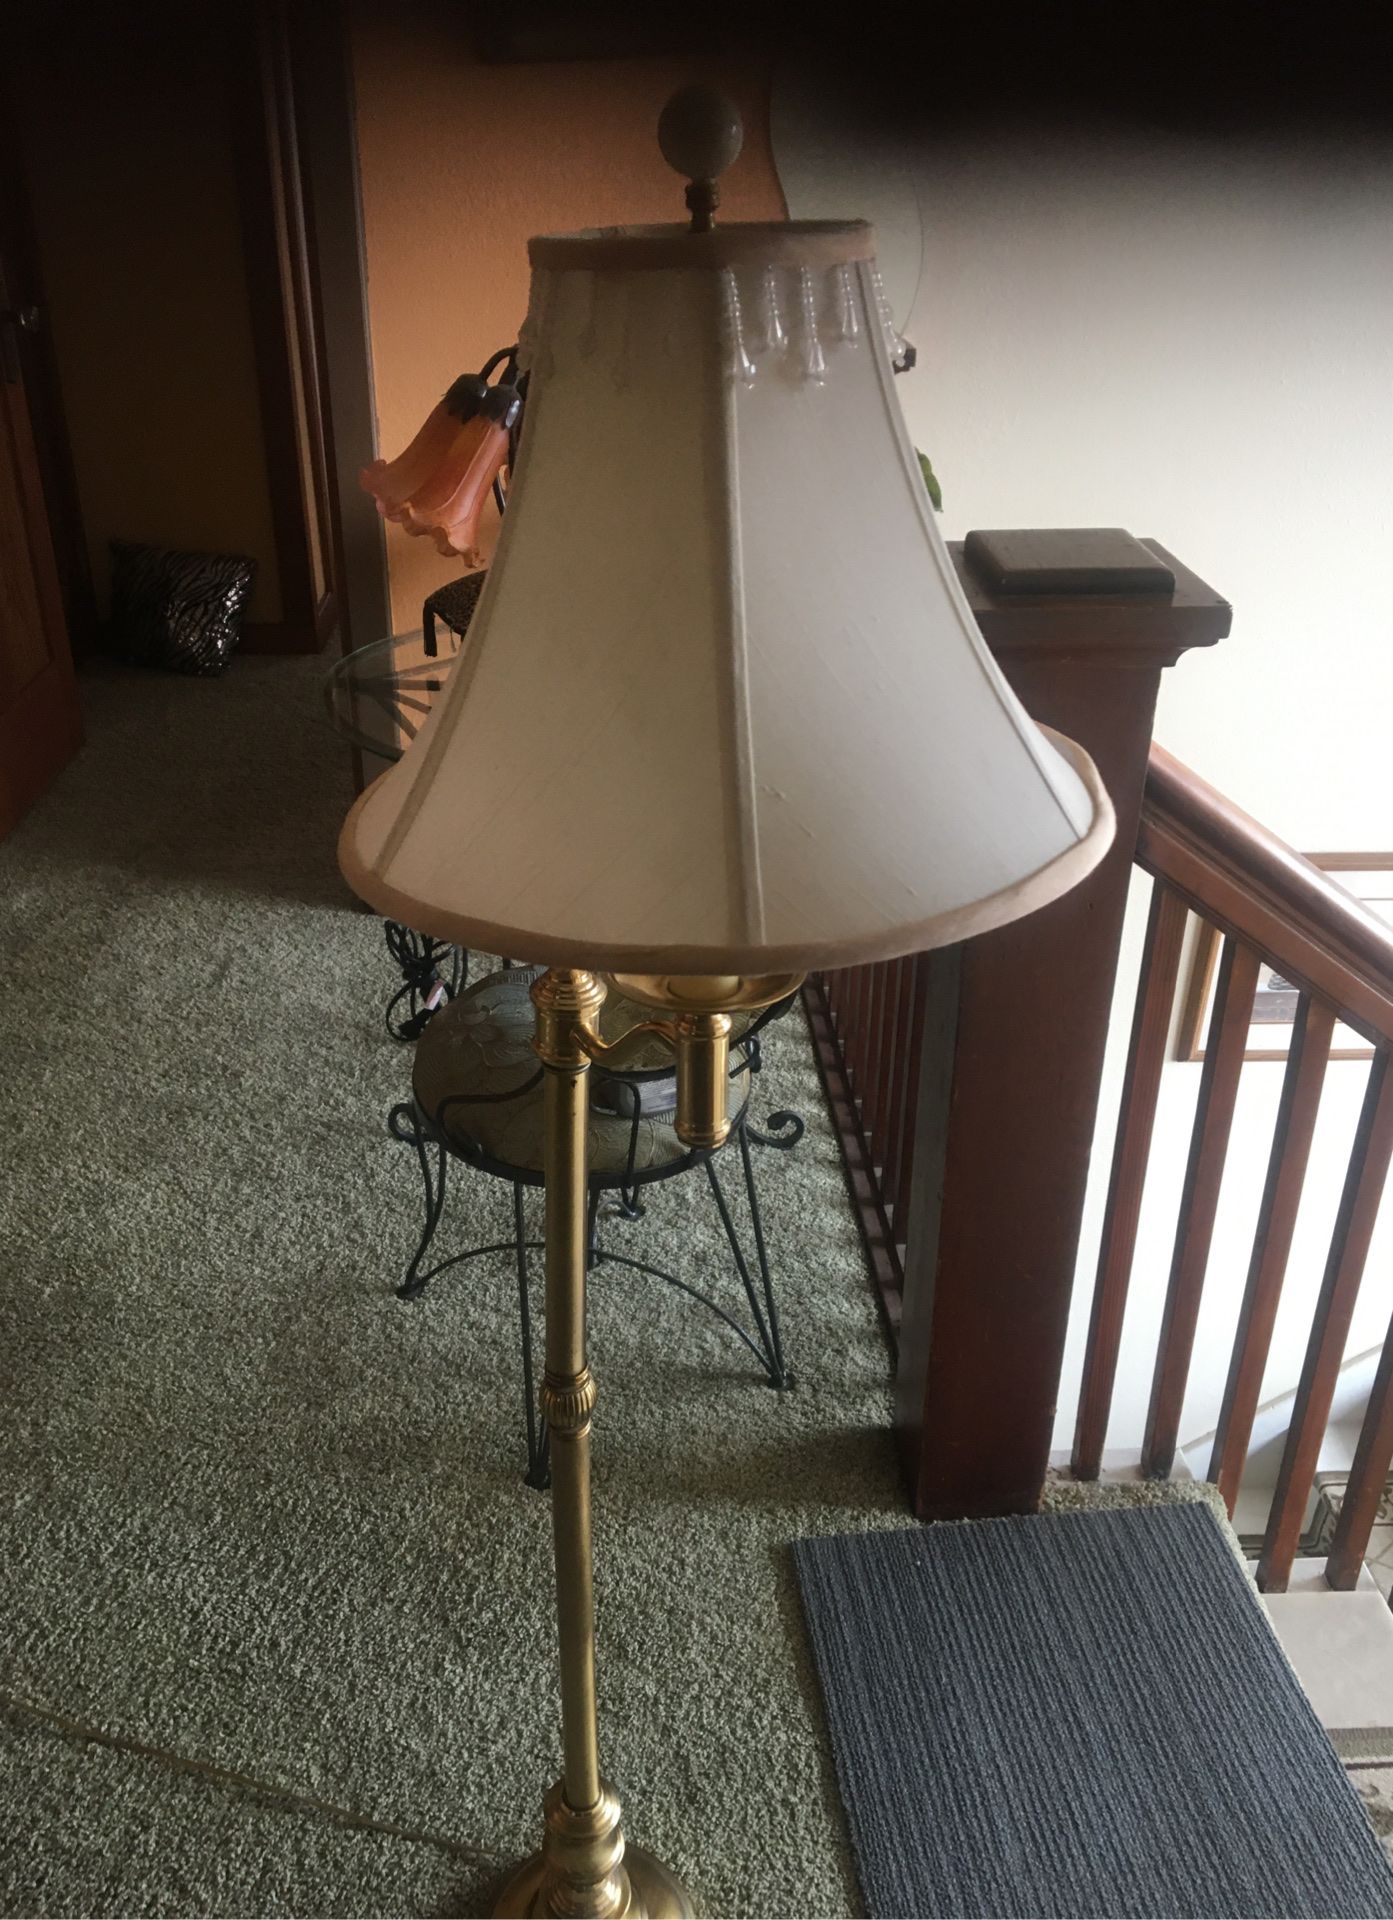 Reading floor lamp 4 feet tall. $25